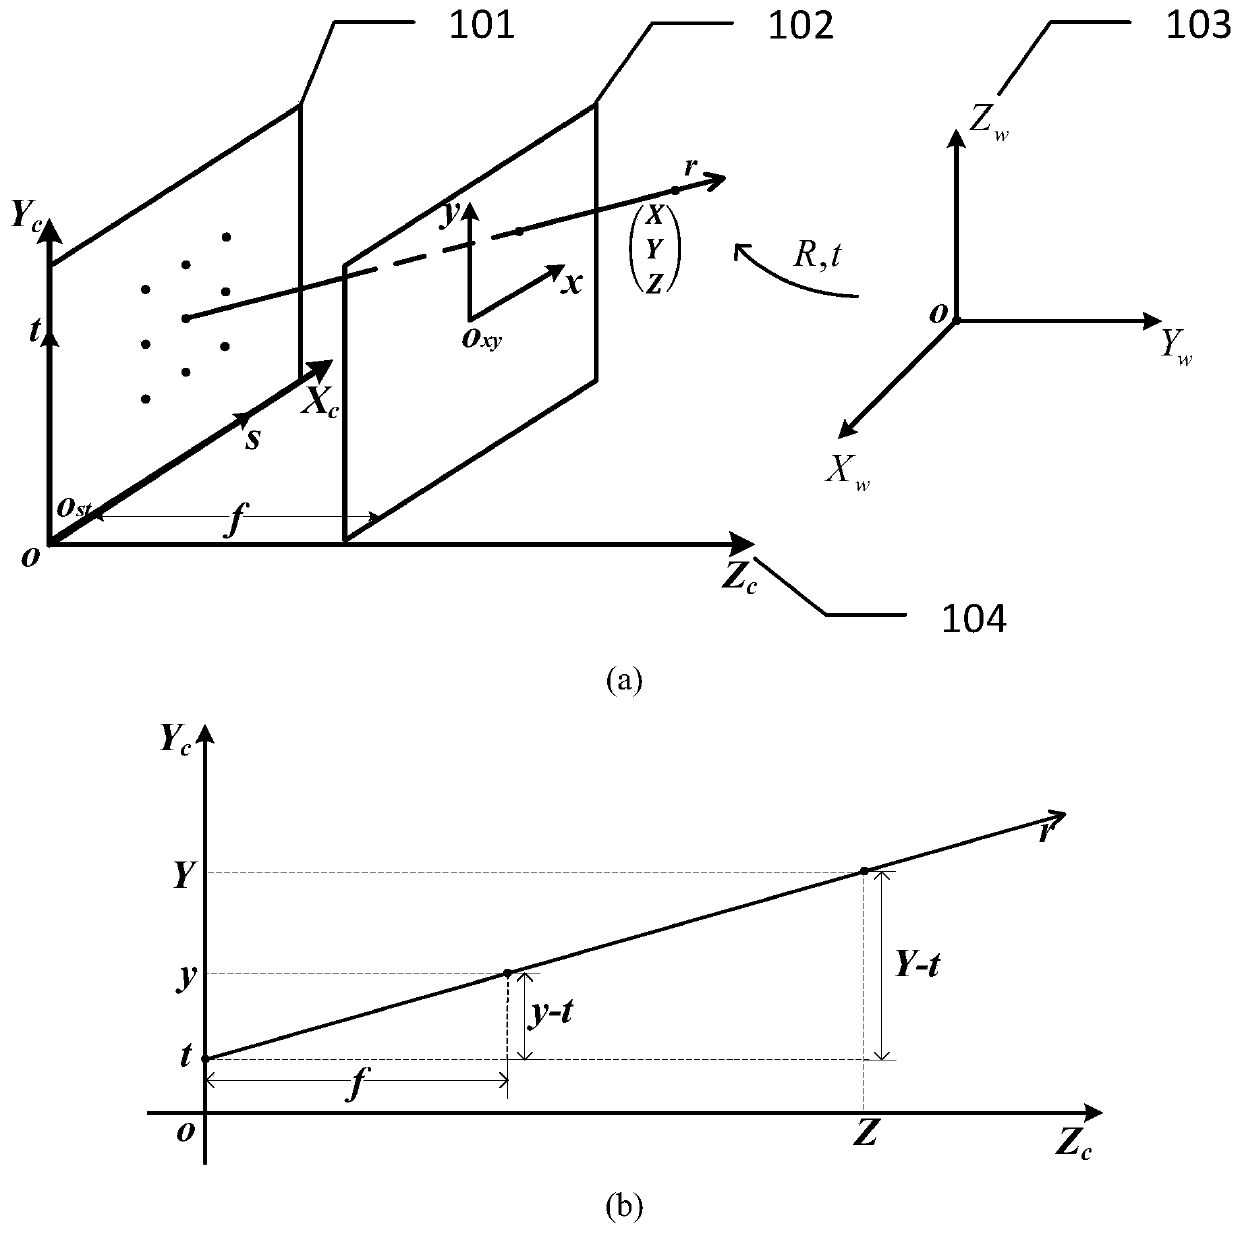 Light field camera calibration method based on multi-center projection model